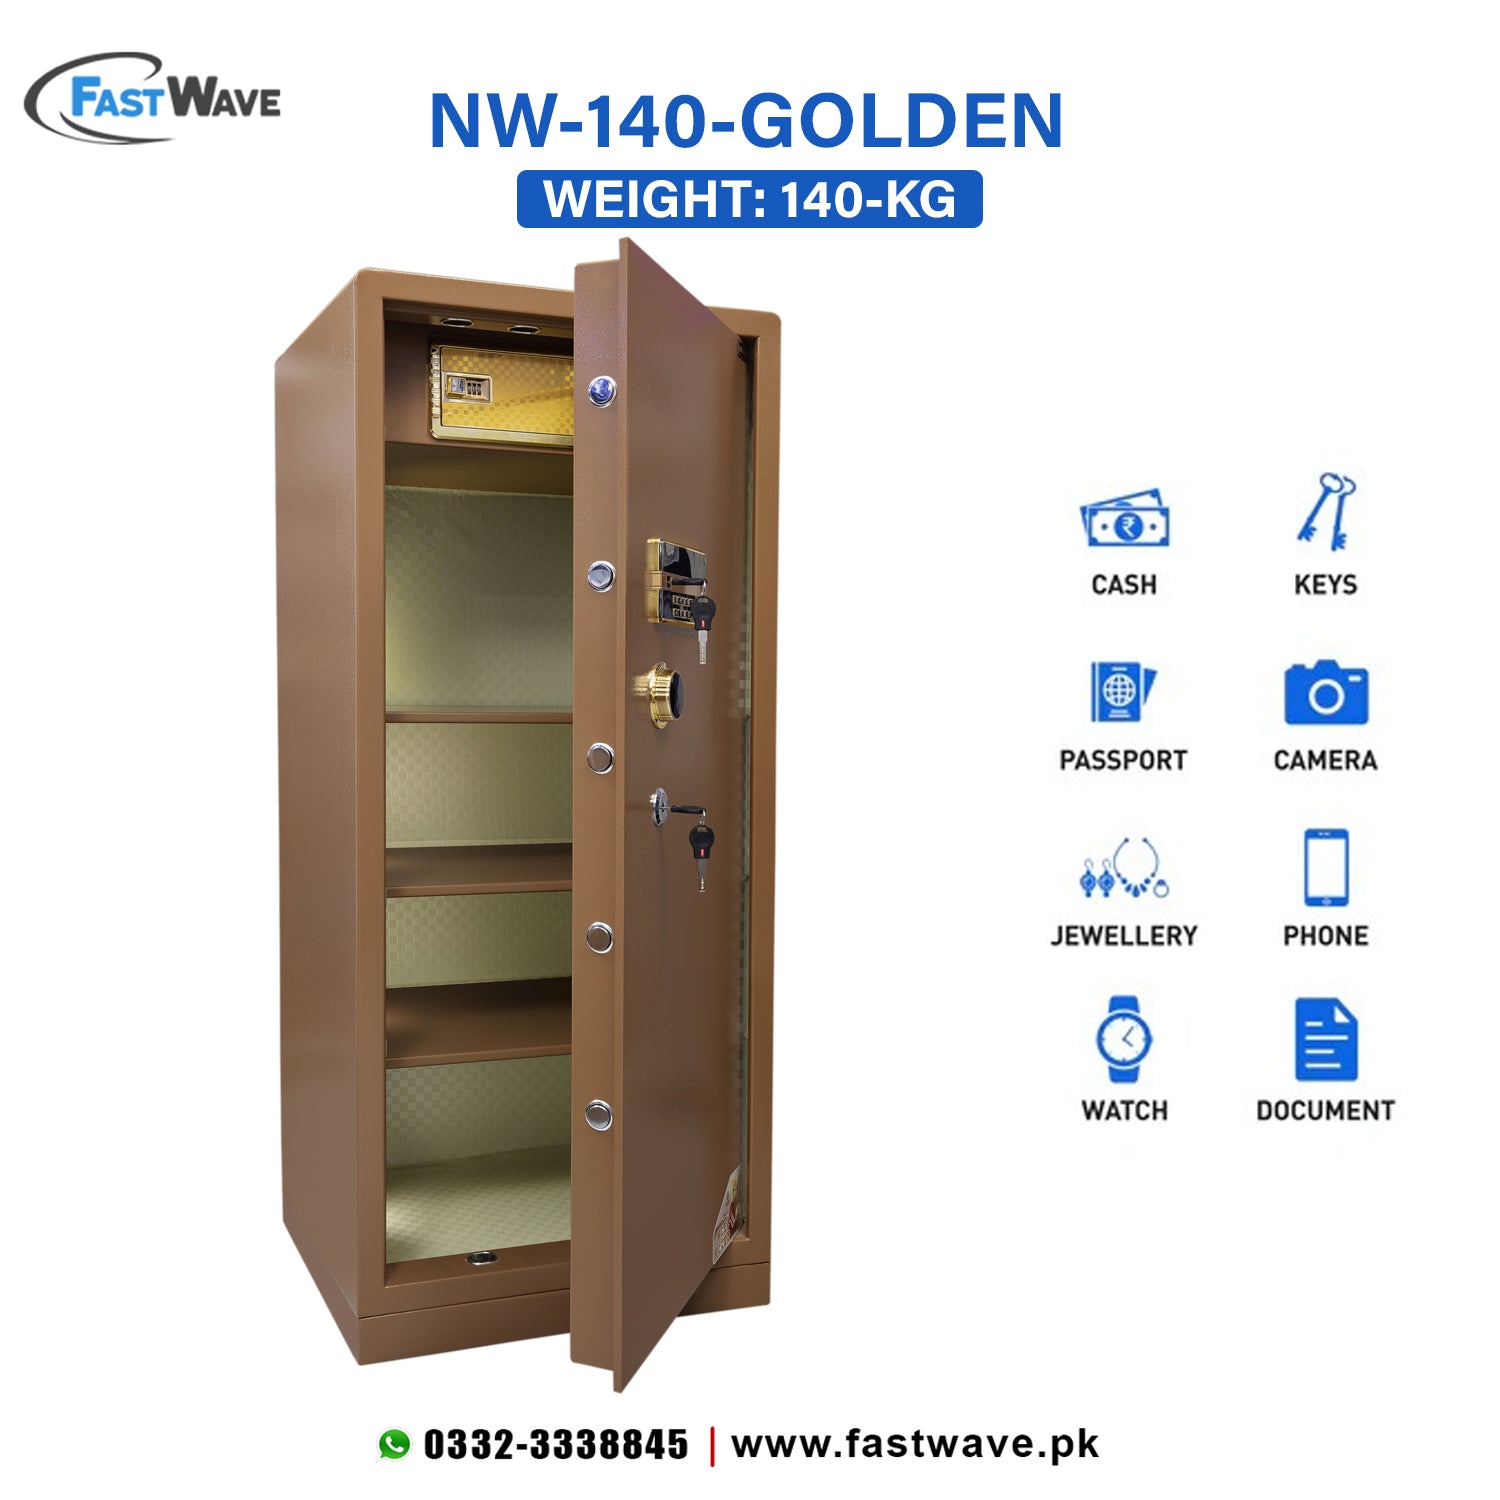 Digital Security Locker NW-KG-140 Golden Thumb